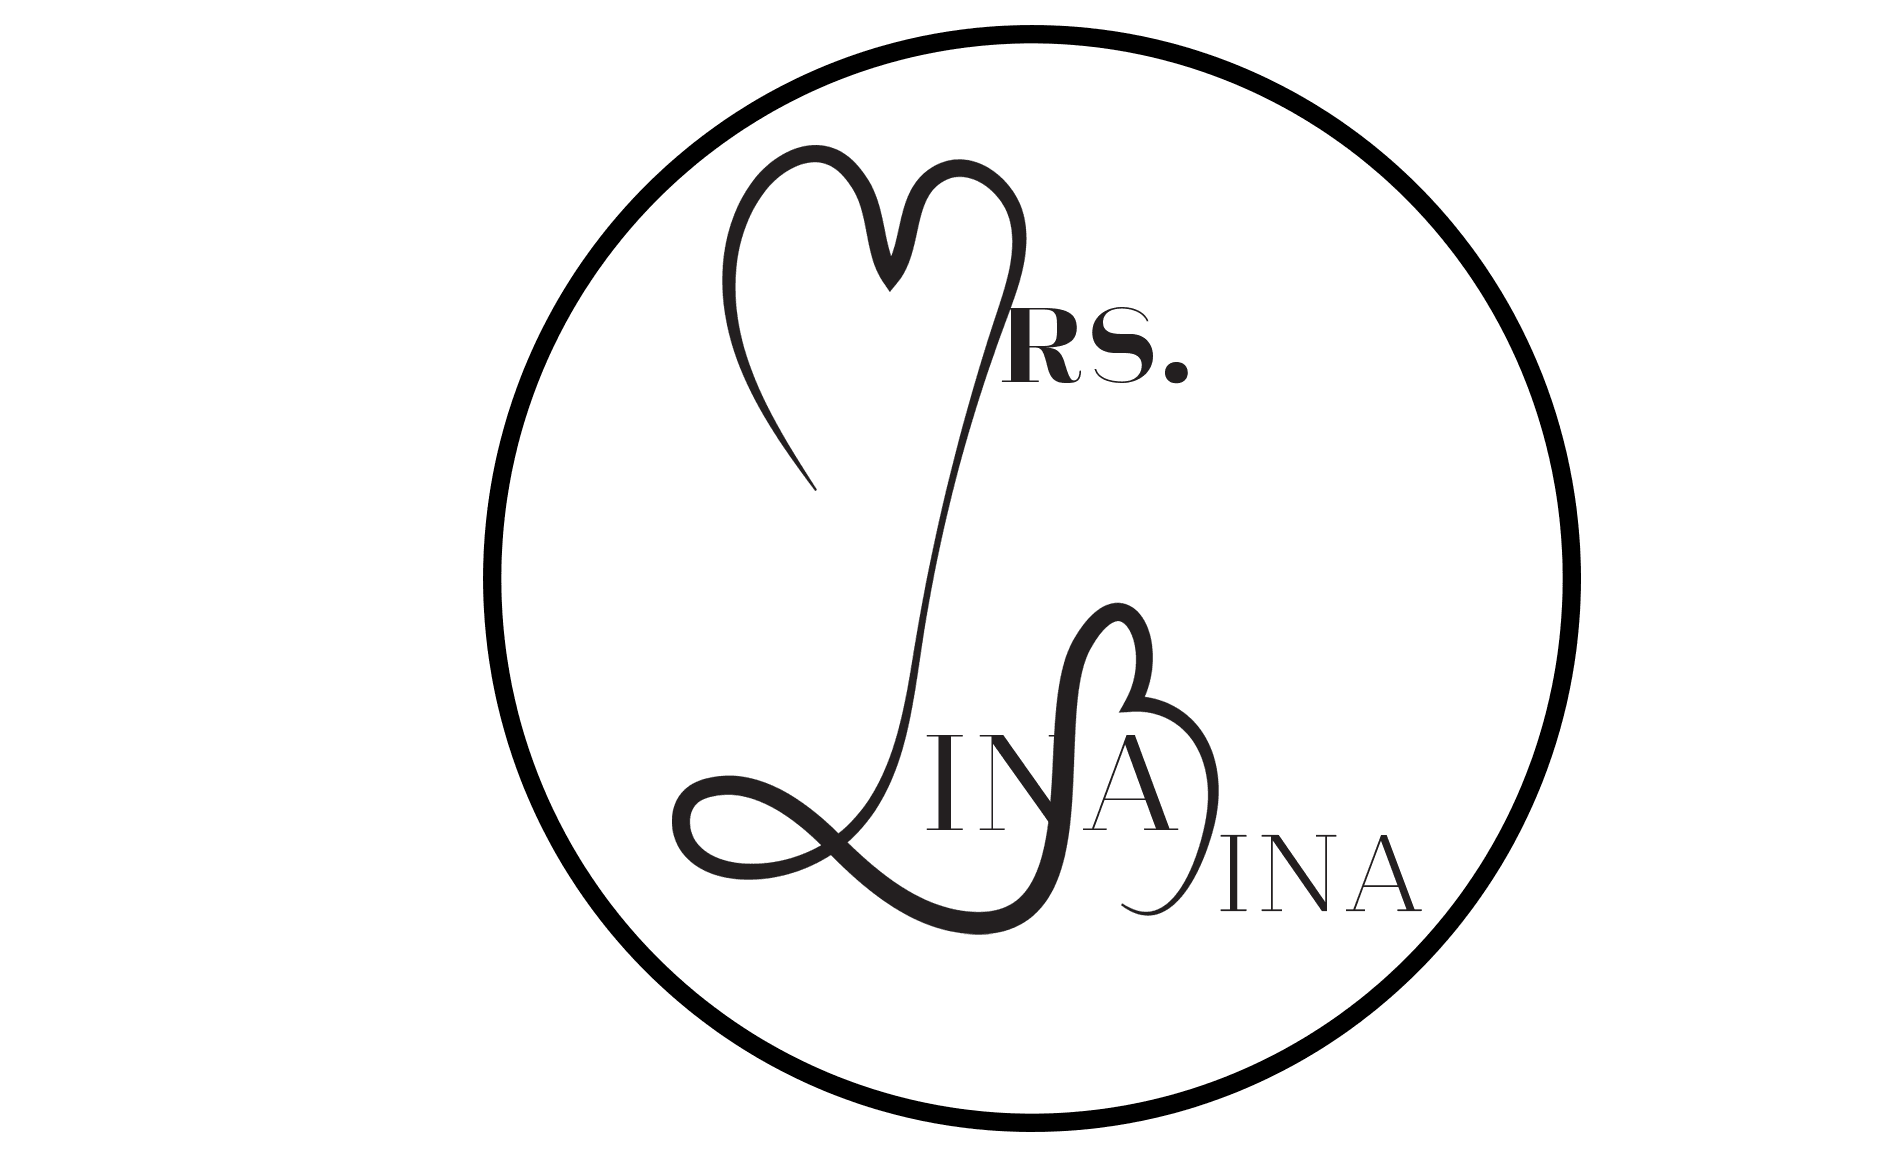 Buy Mrs Lina Bina A Coffee Ko Mrslinabina Ko Fi ️ Where